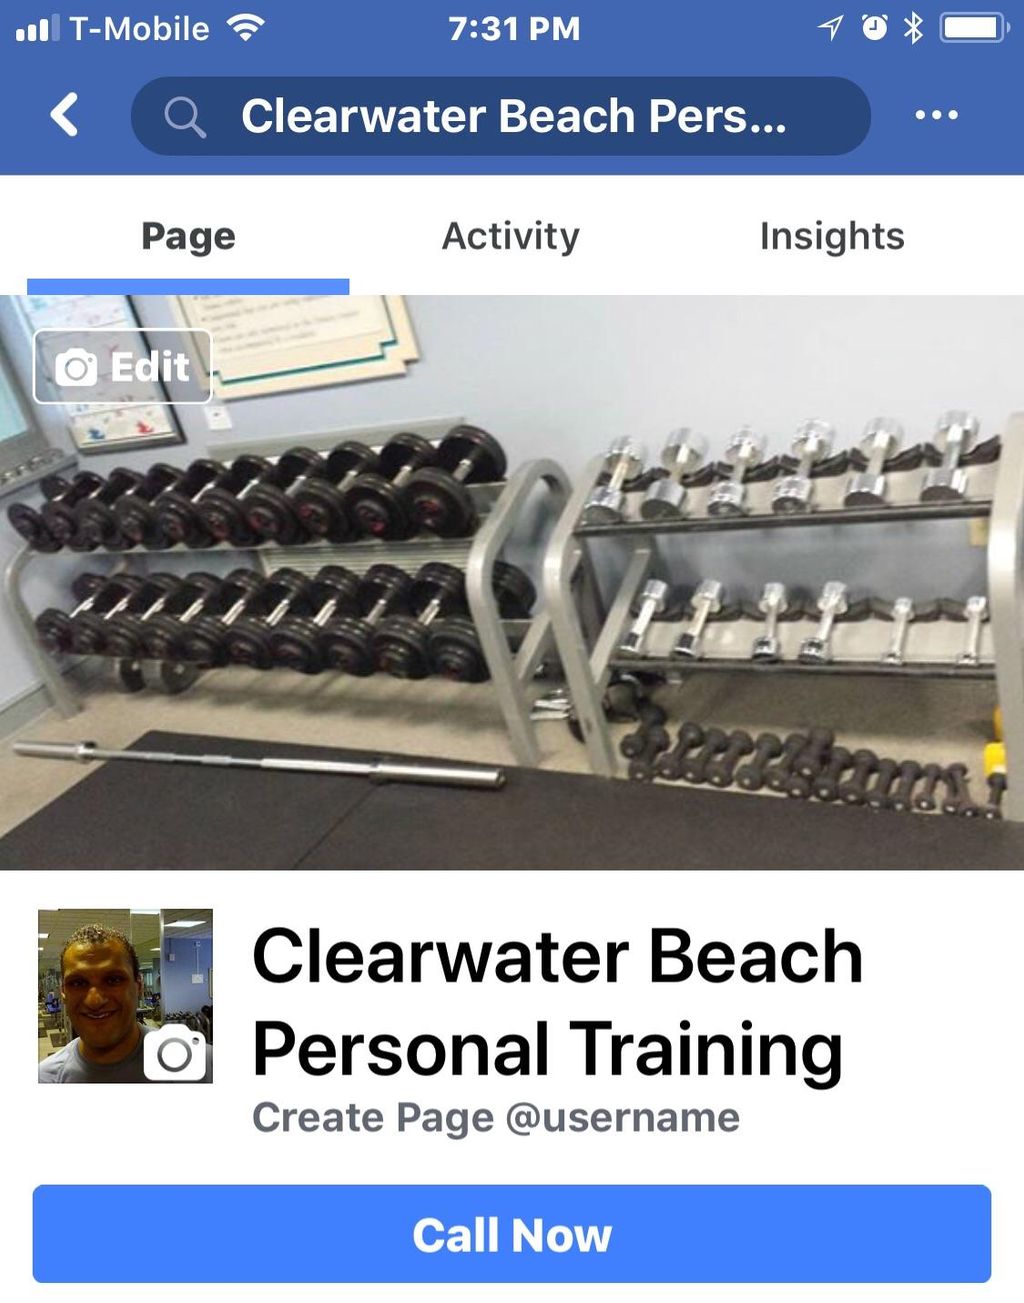 Clearwater Beach Personal Training LLC